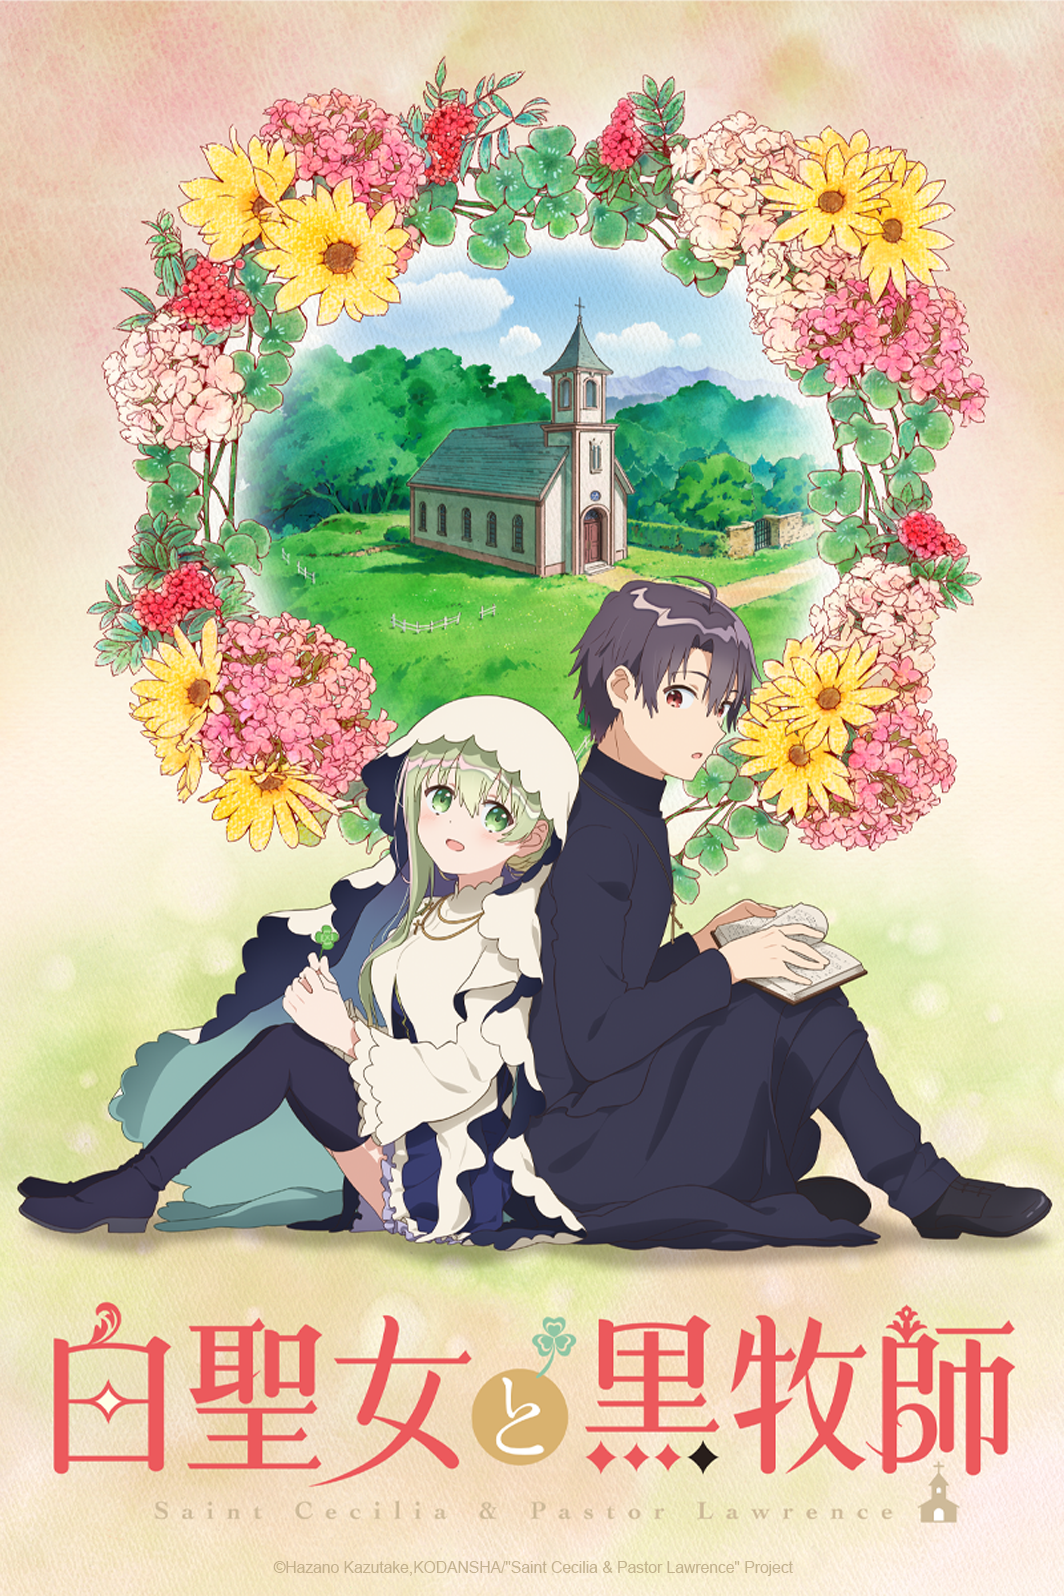 Anime Like Saint Cecilia & Pastor Lawrence